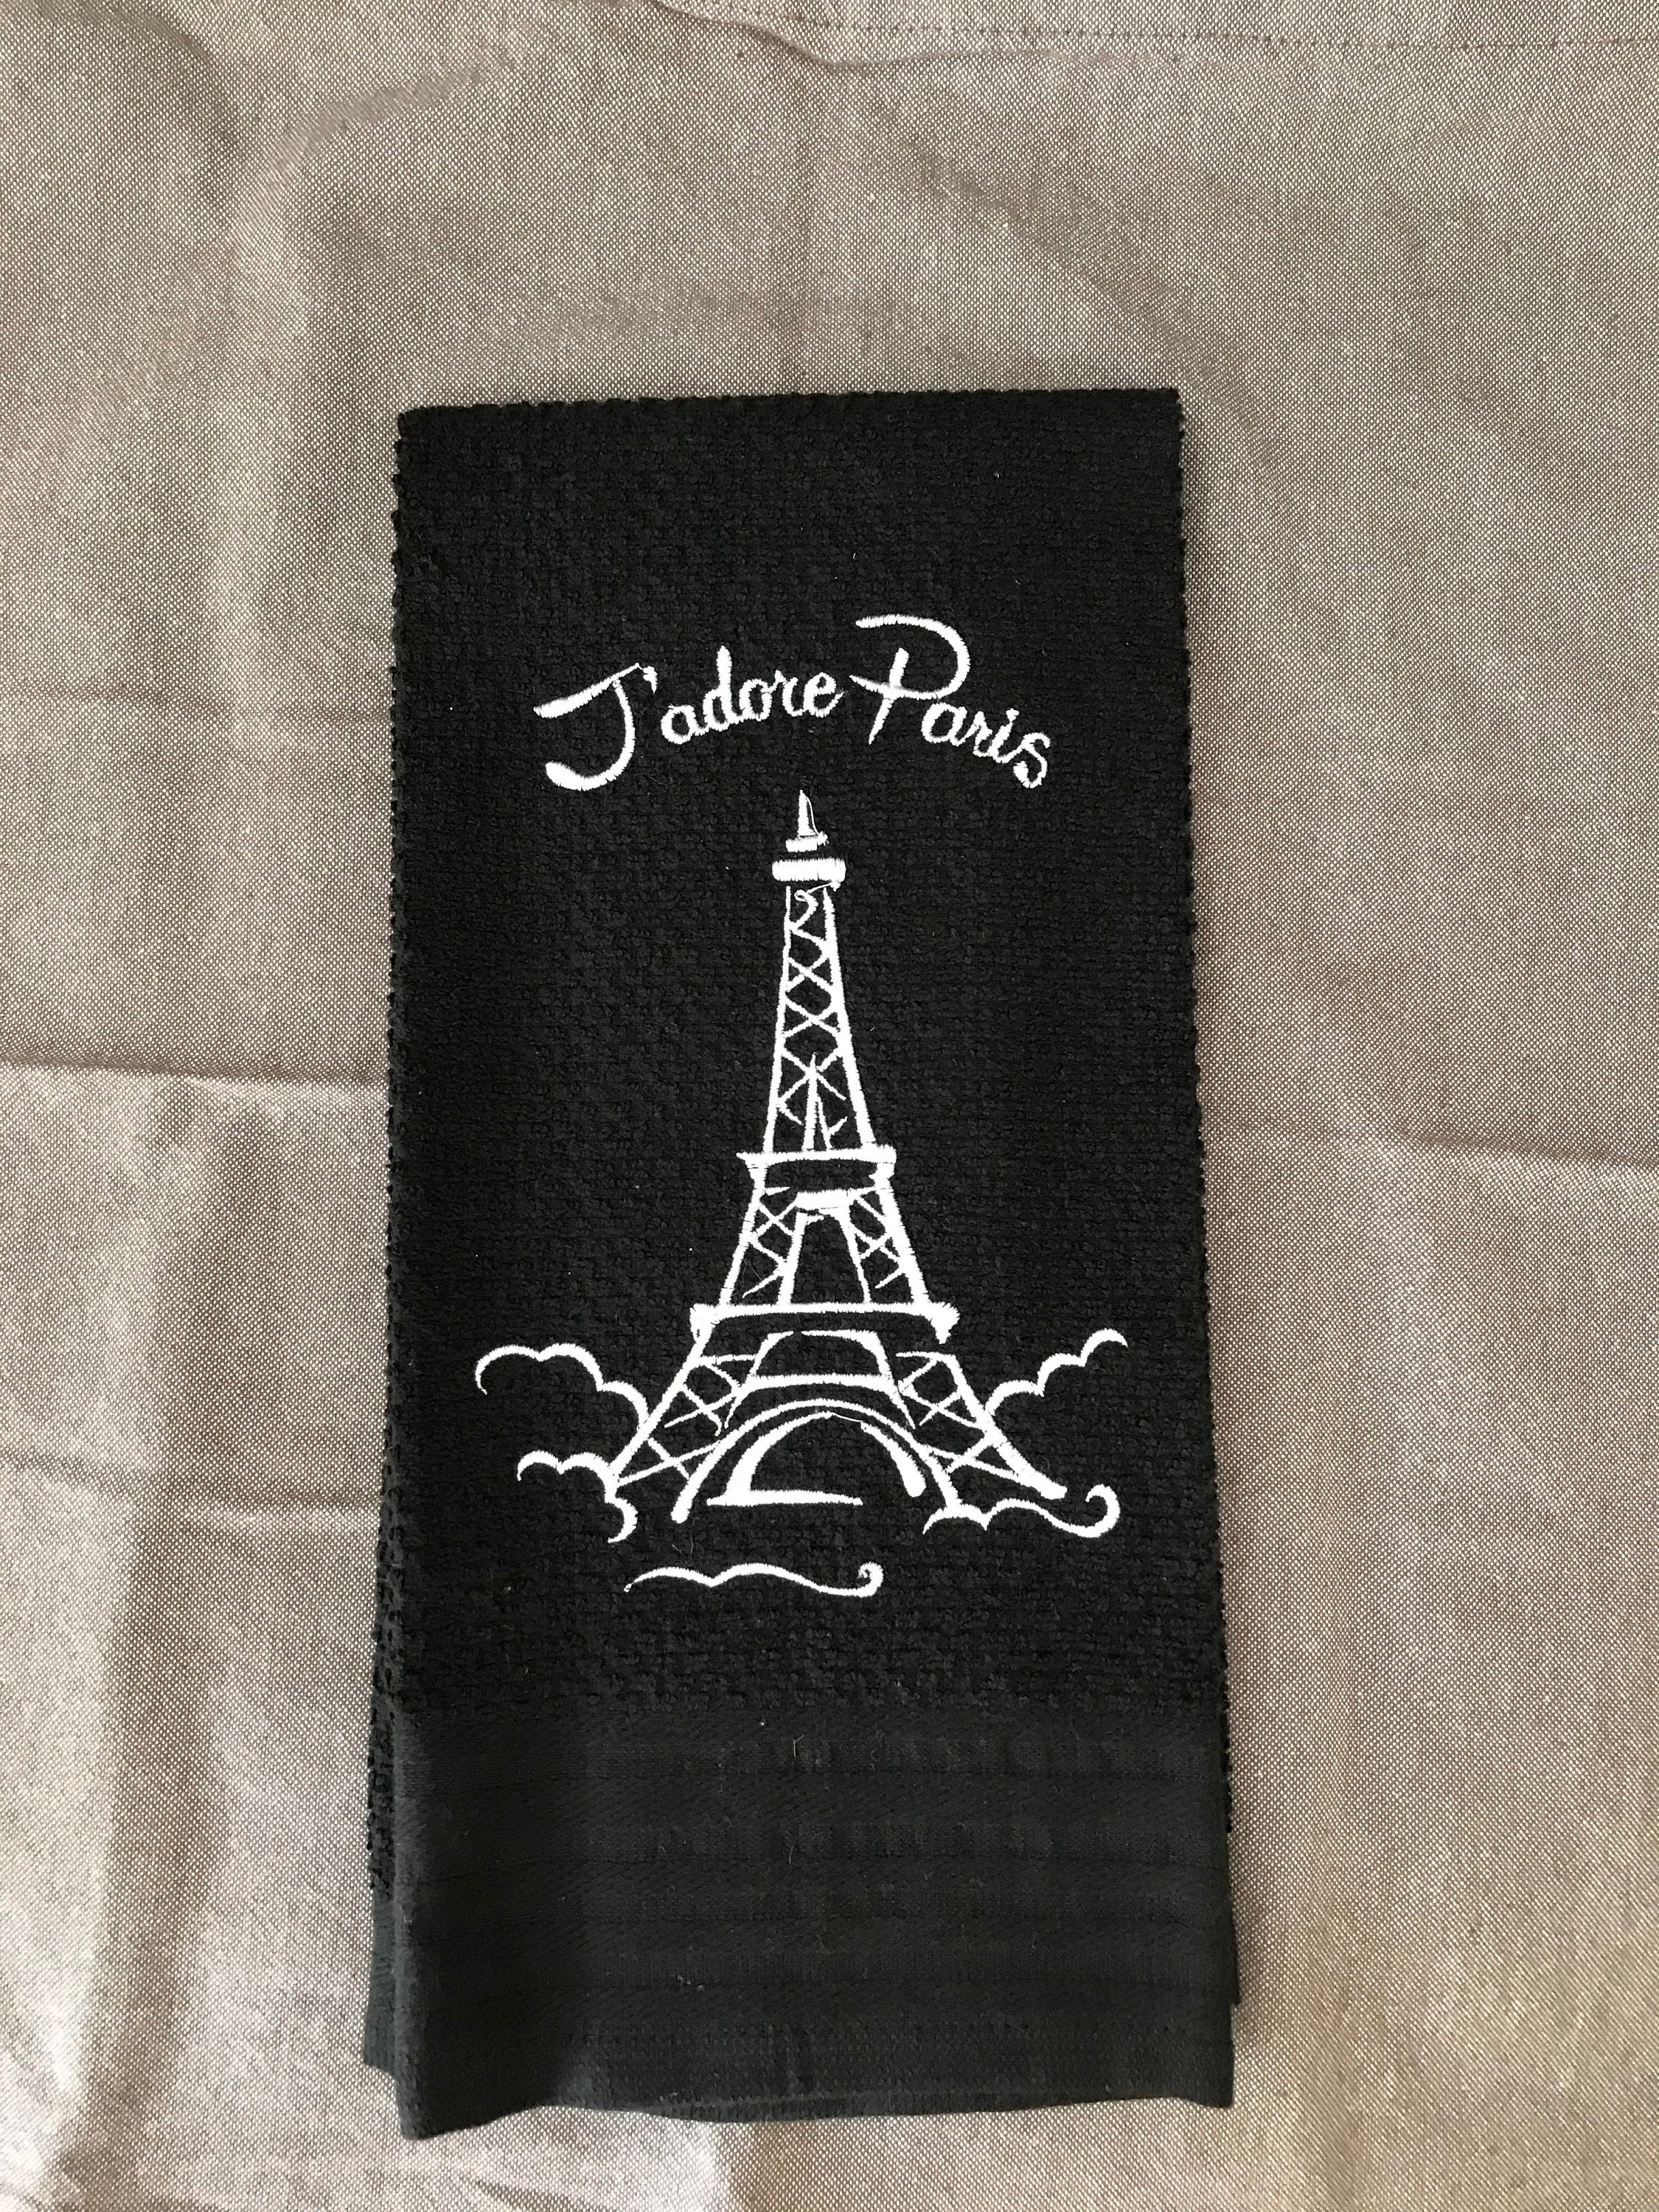 2 LOVE Eiffel Tower*Lips*Sundae Etc Velour or Flour Sack Kitchen Towels NWT CUTE 